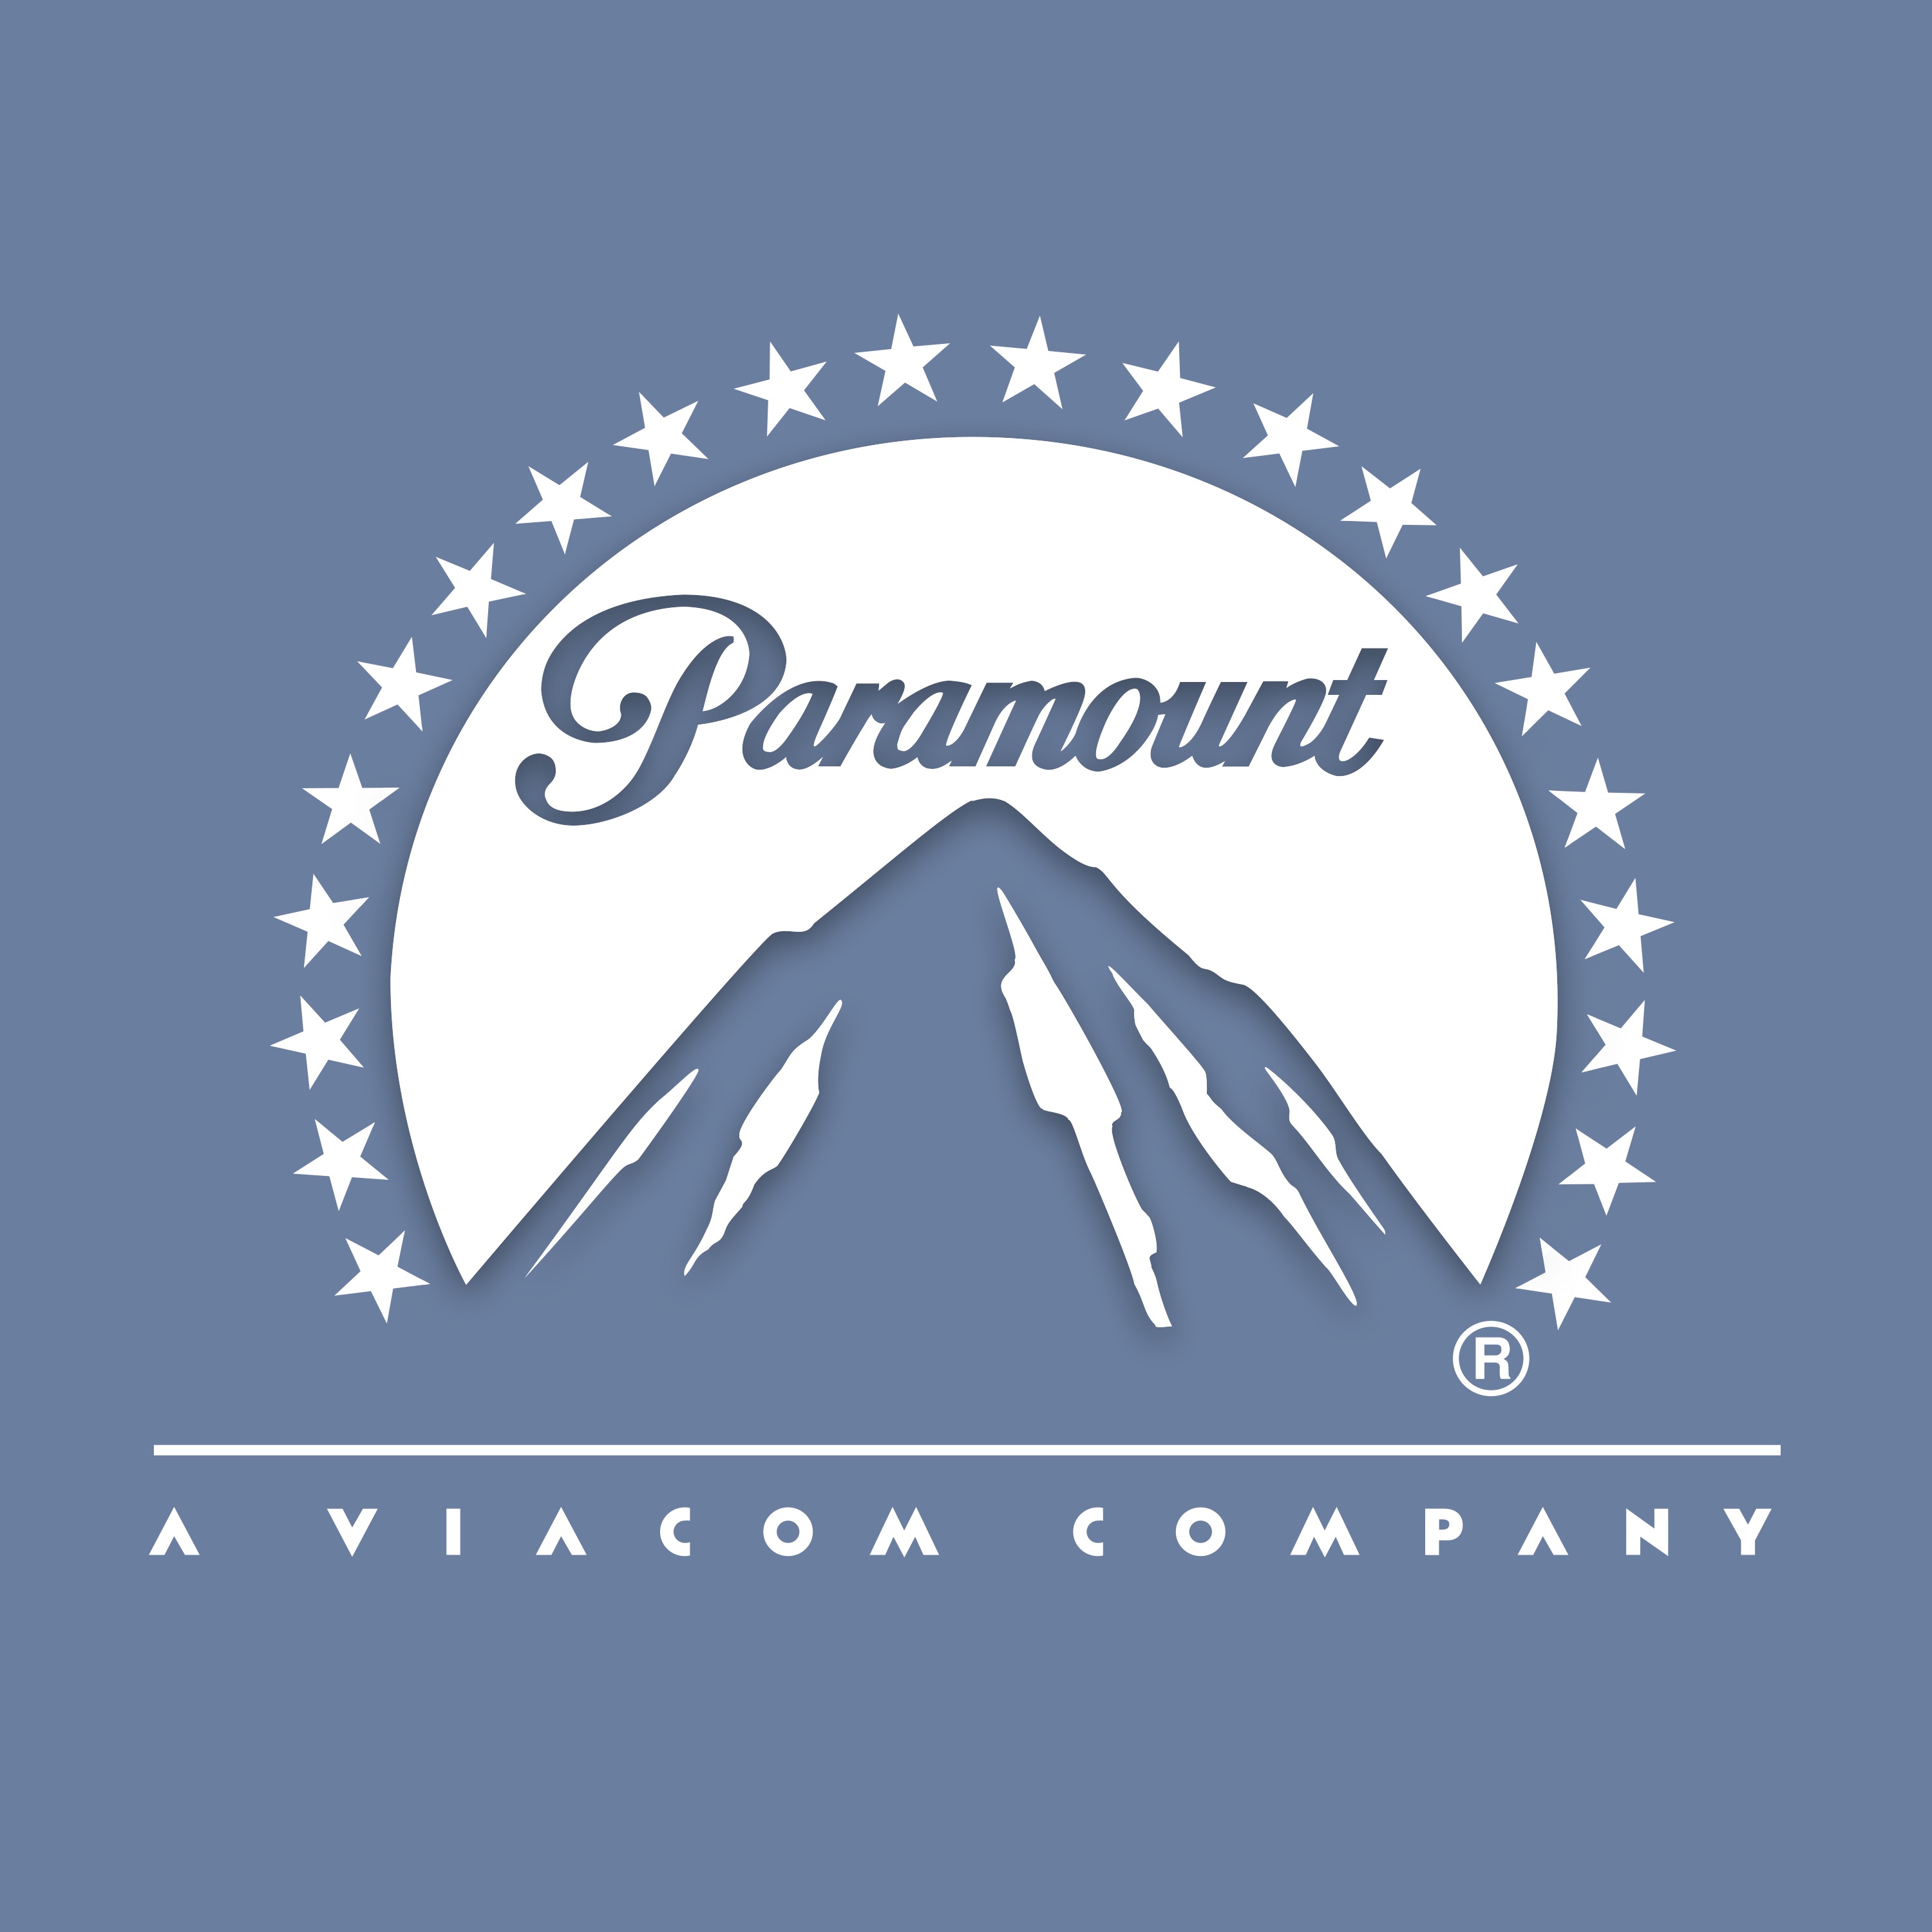 Виаком Парамаунт. Парамаунт Пикчерз. Paramount логотип. Парамаунт Пикчерз логотип. Парамаунт перевод